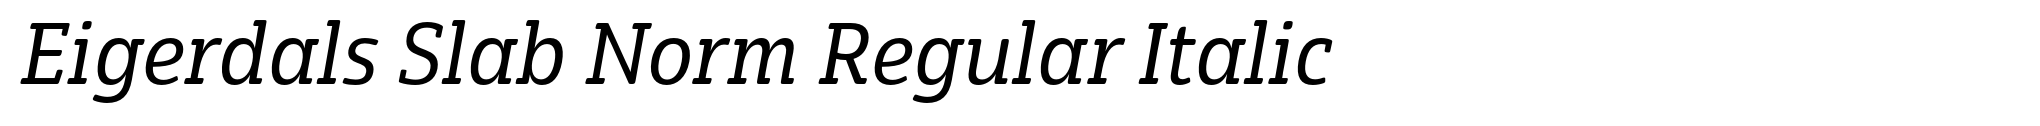 Eigerdals Slab Norm Regular Italic image